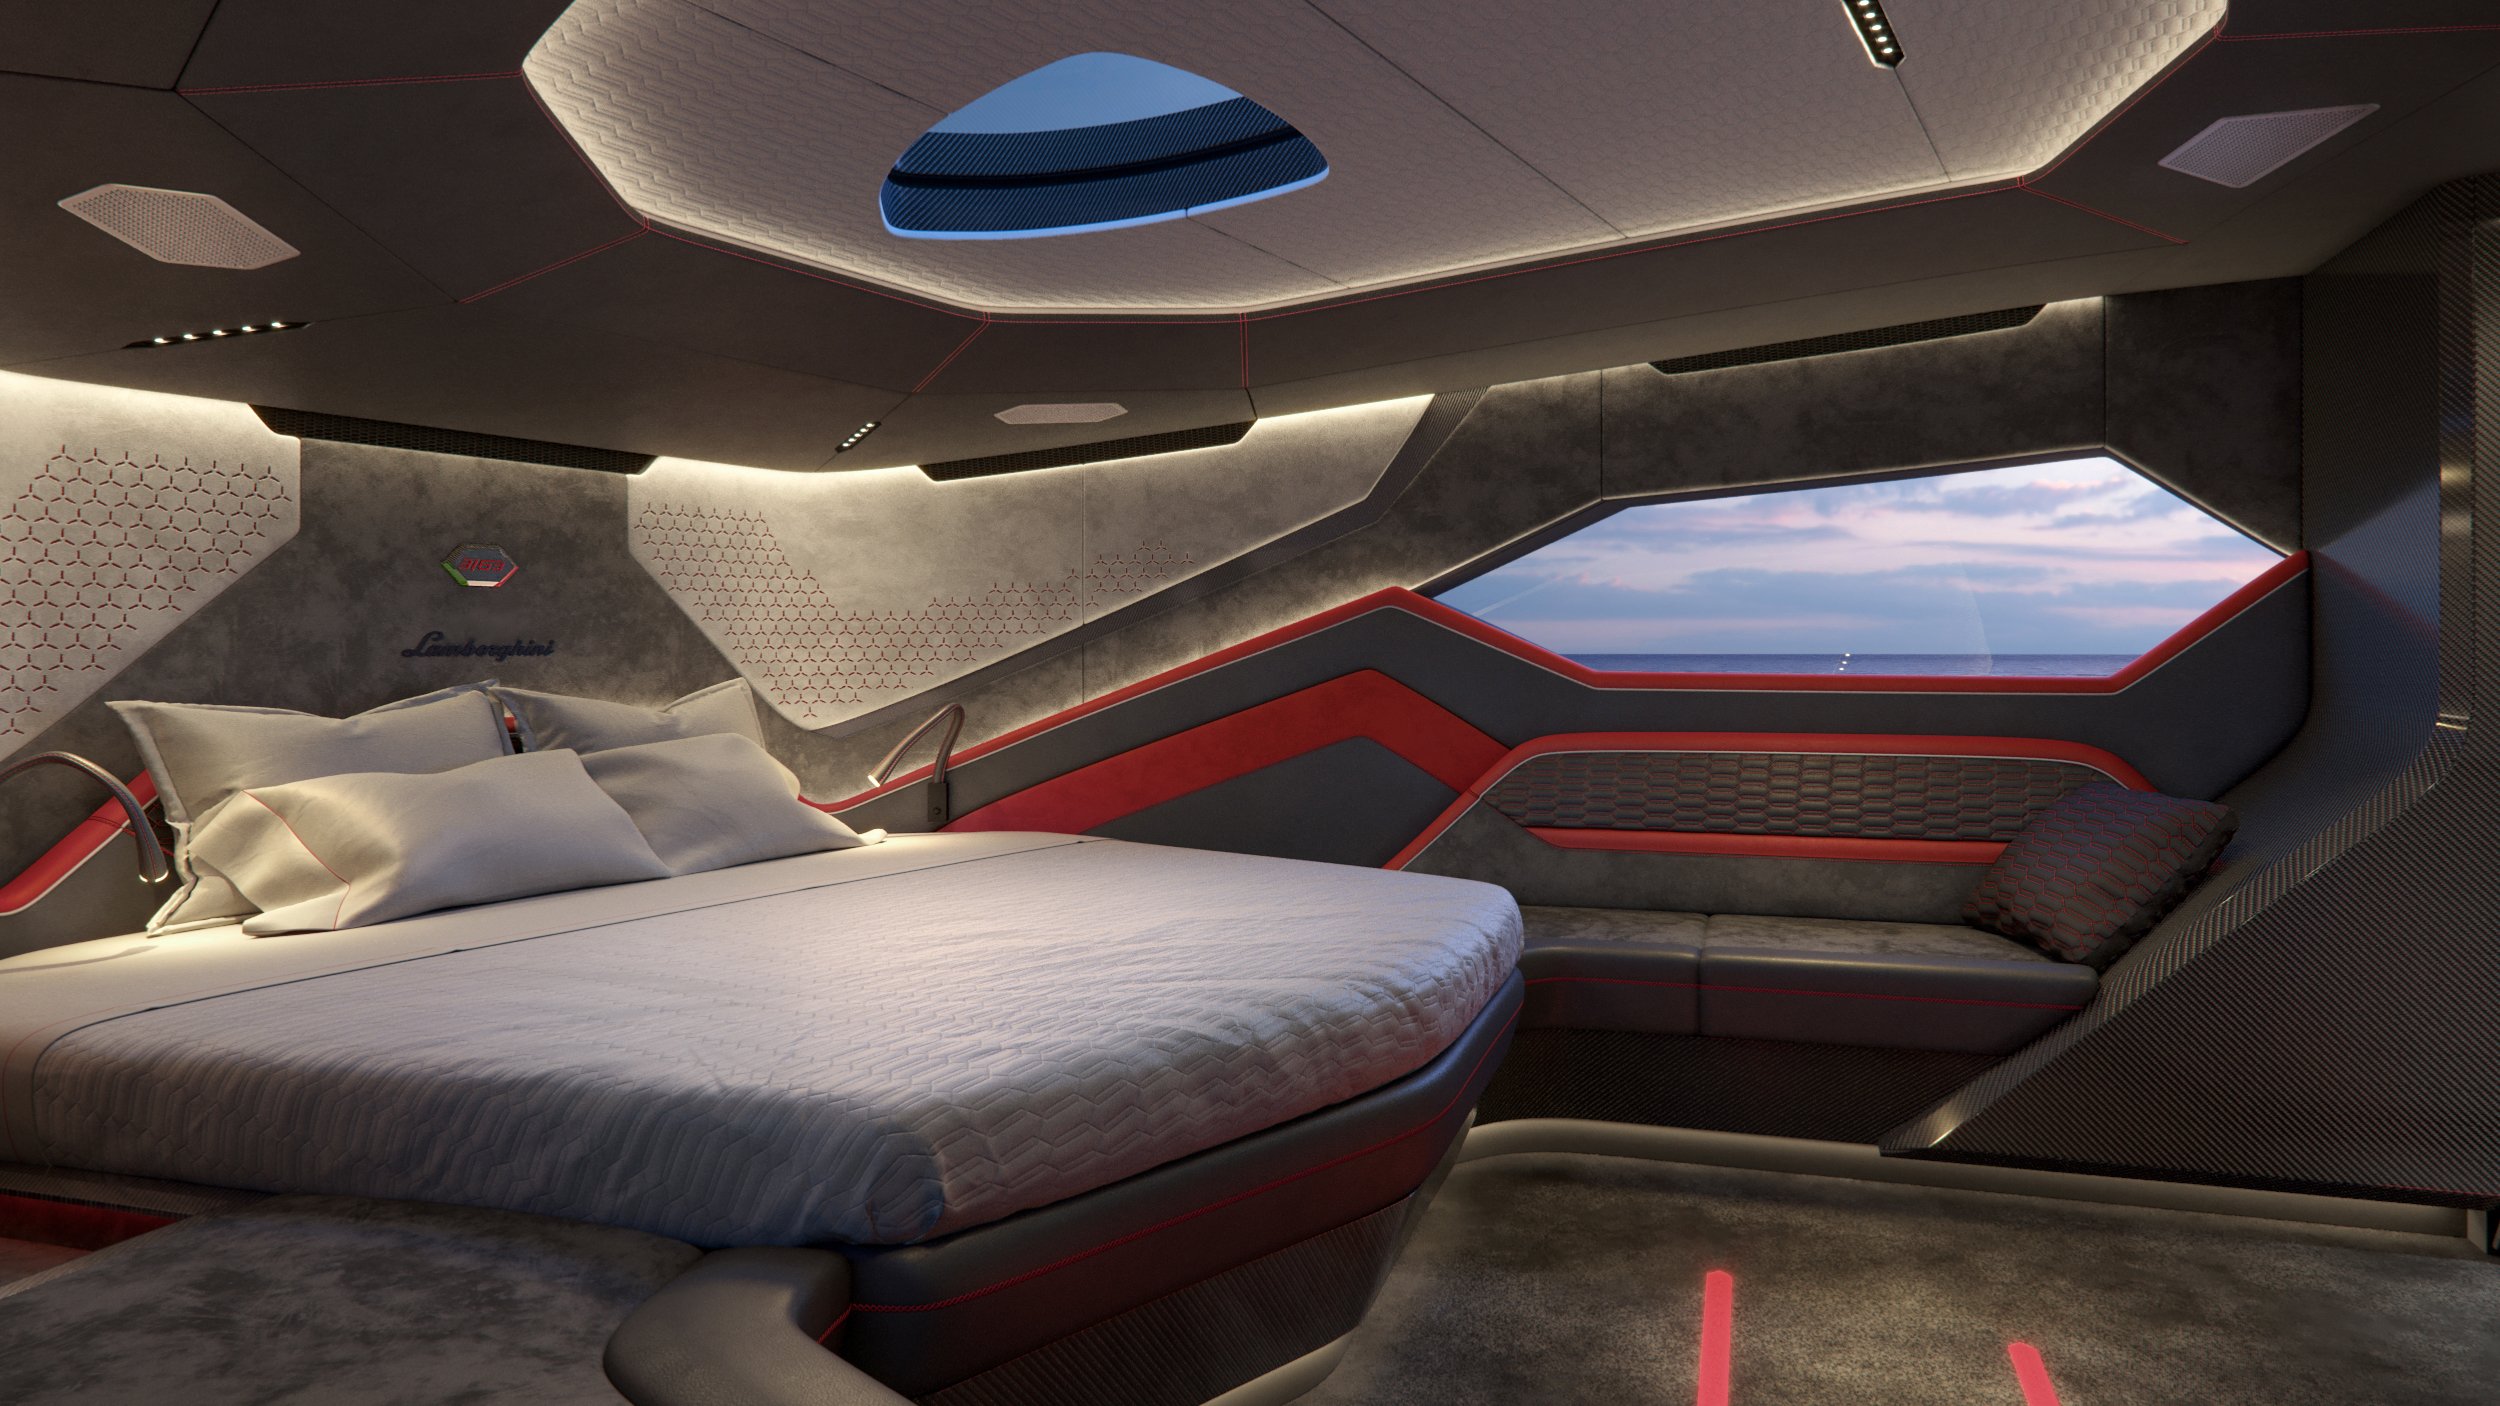 Tecnomar Lamborghini 63 yacht interior 